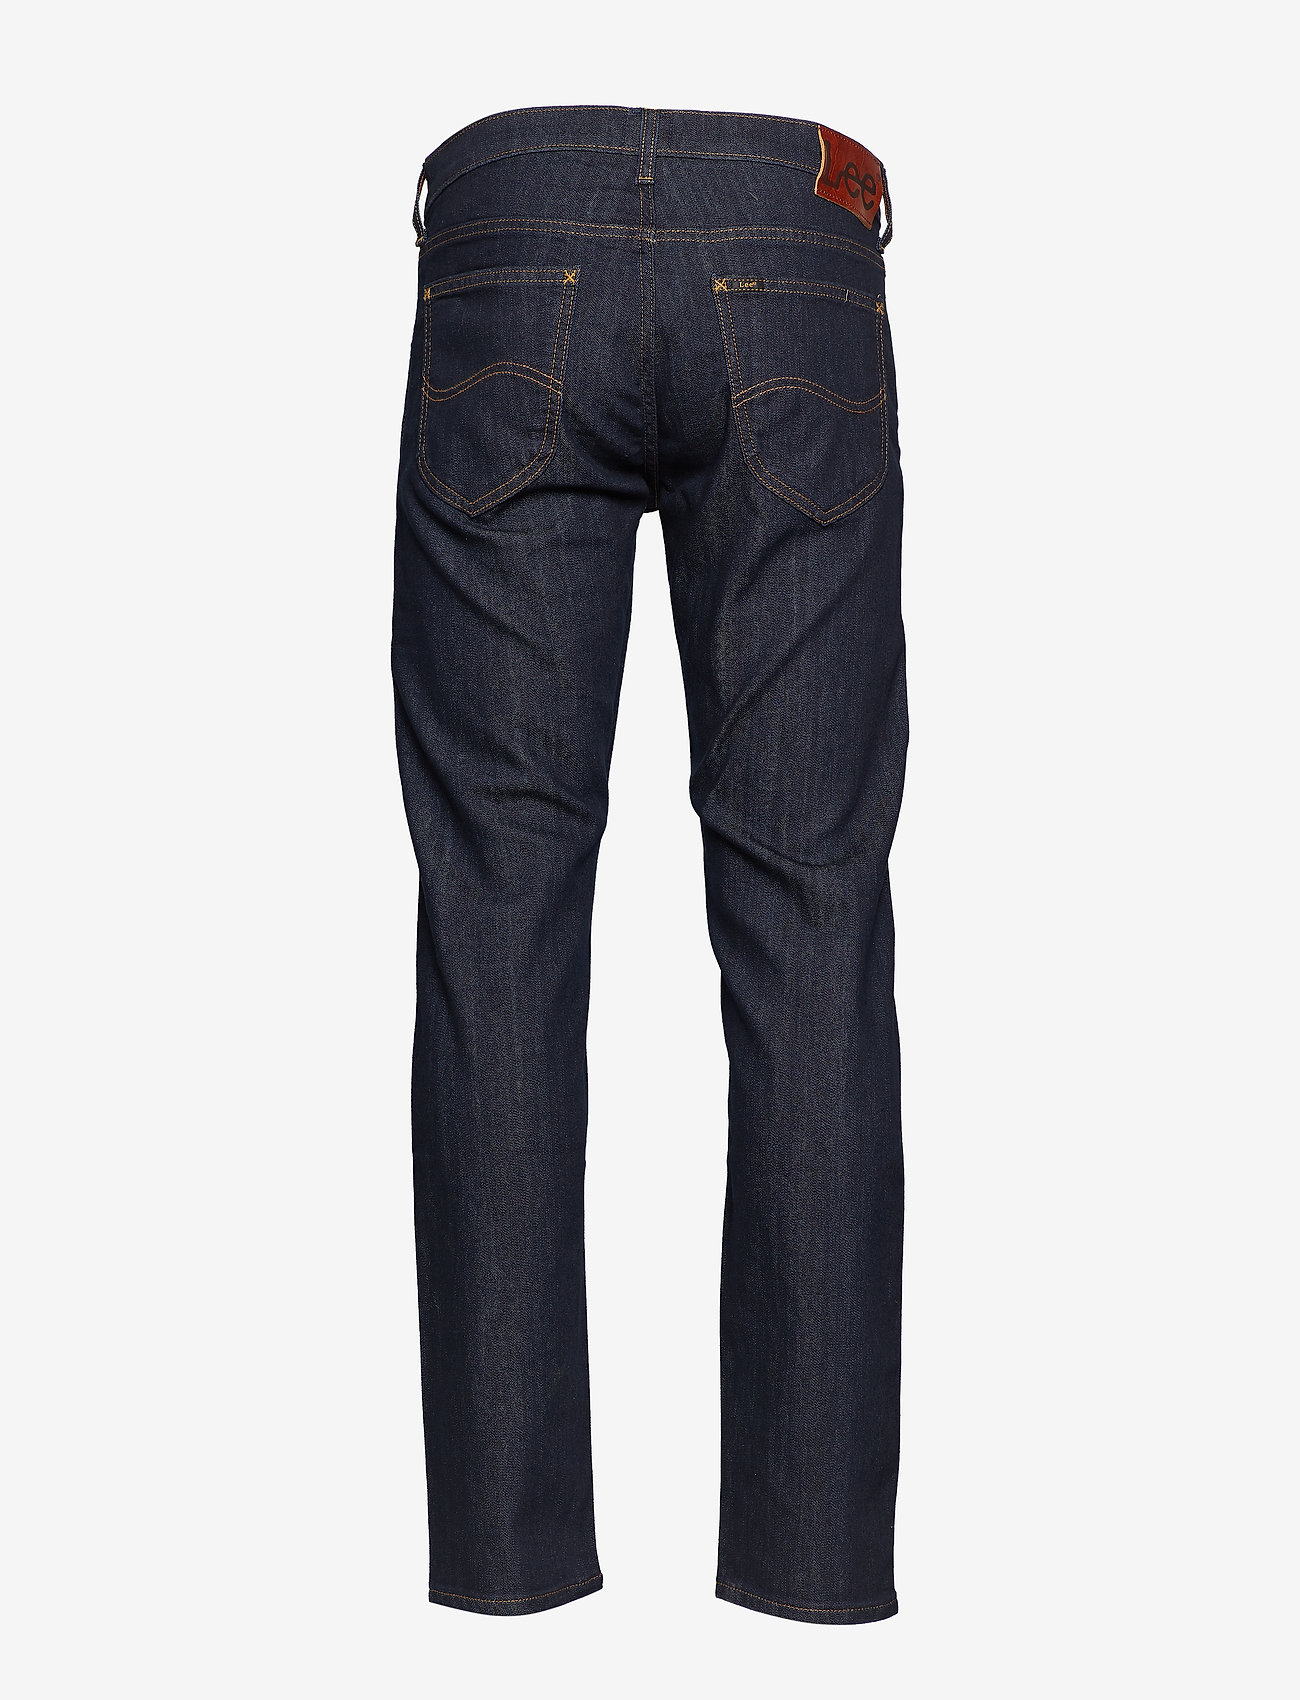 Lee Jeans - DAREN RINSE - regular jeans - rinse - 1